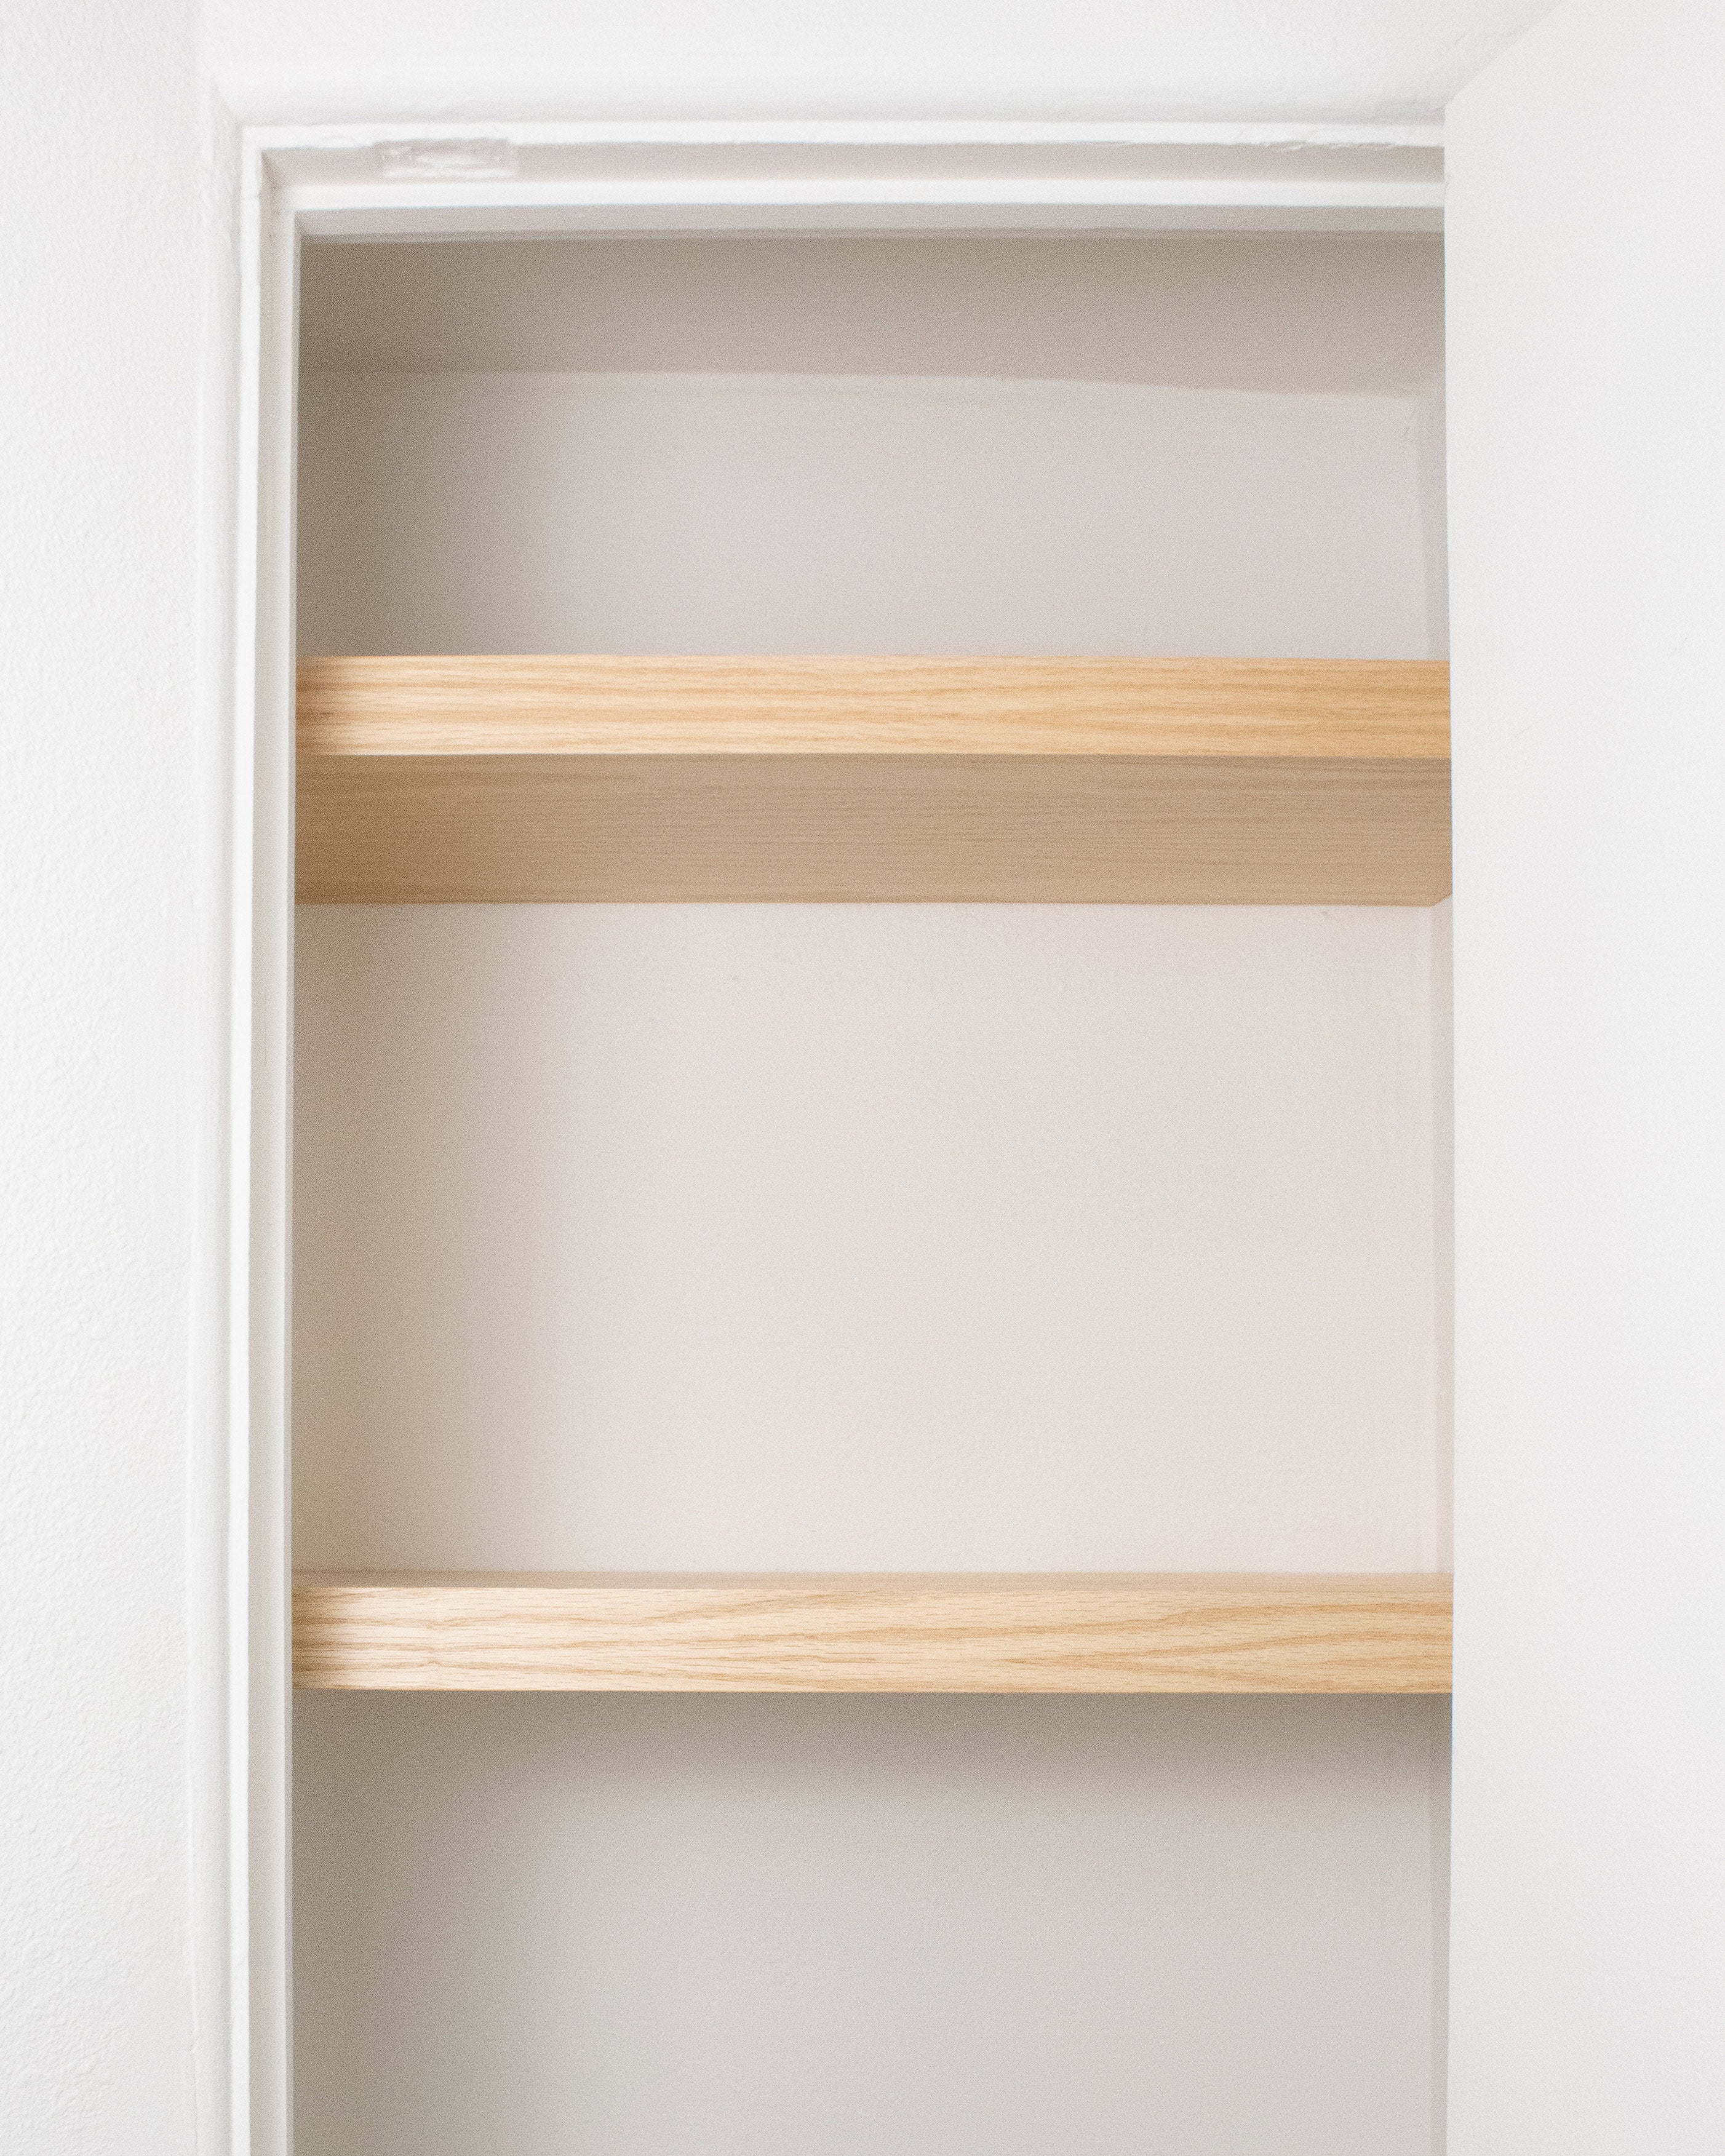 Ash 2-4" thick Cabinet Top / Slab Shelf